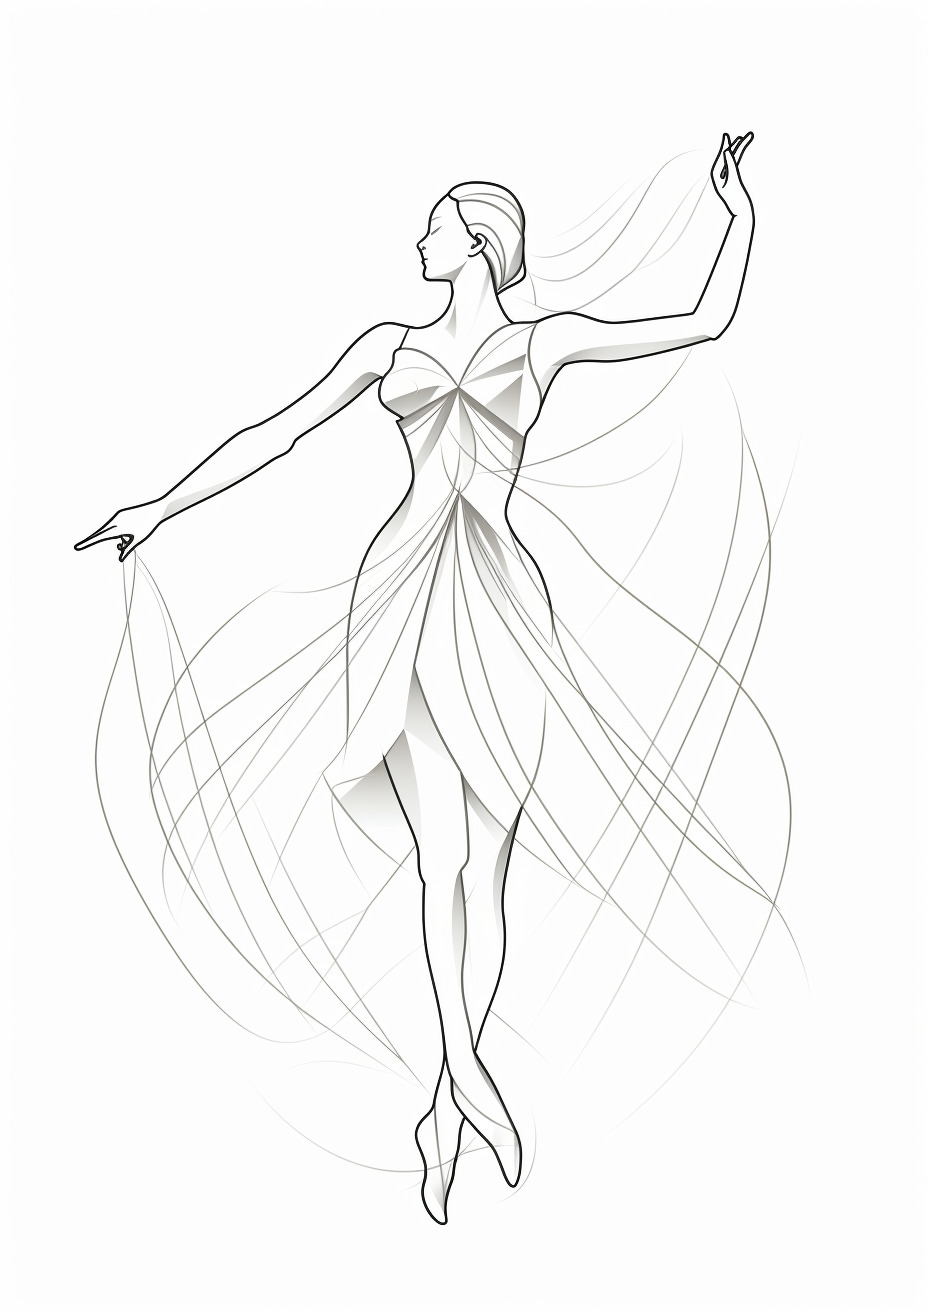 coloring page of a femalde dancer